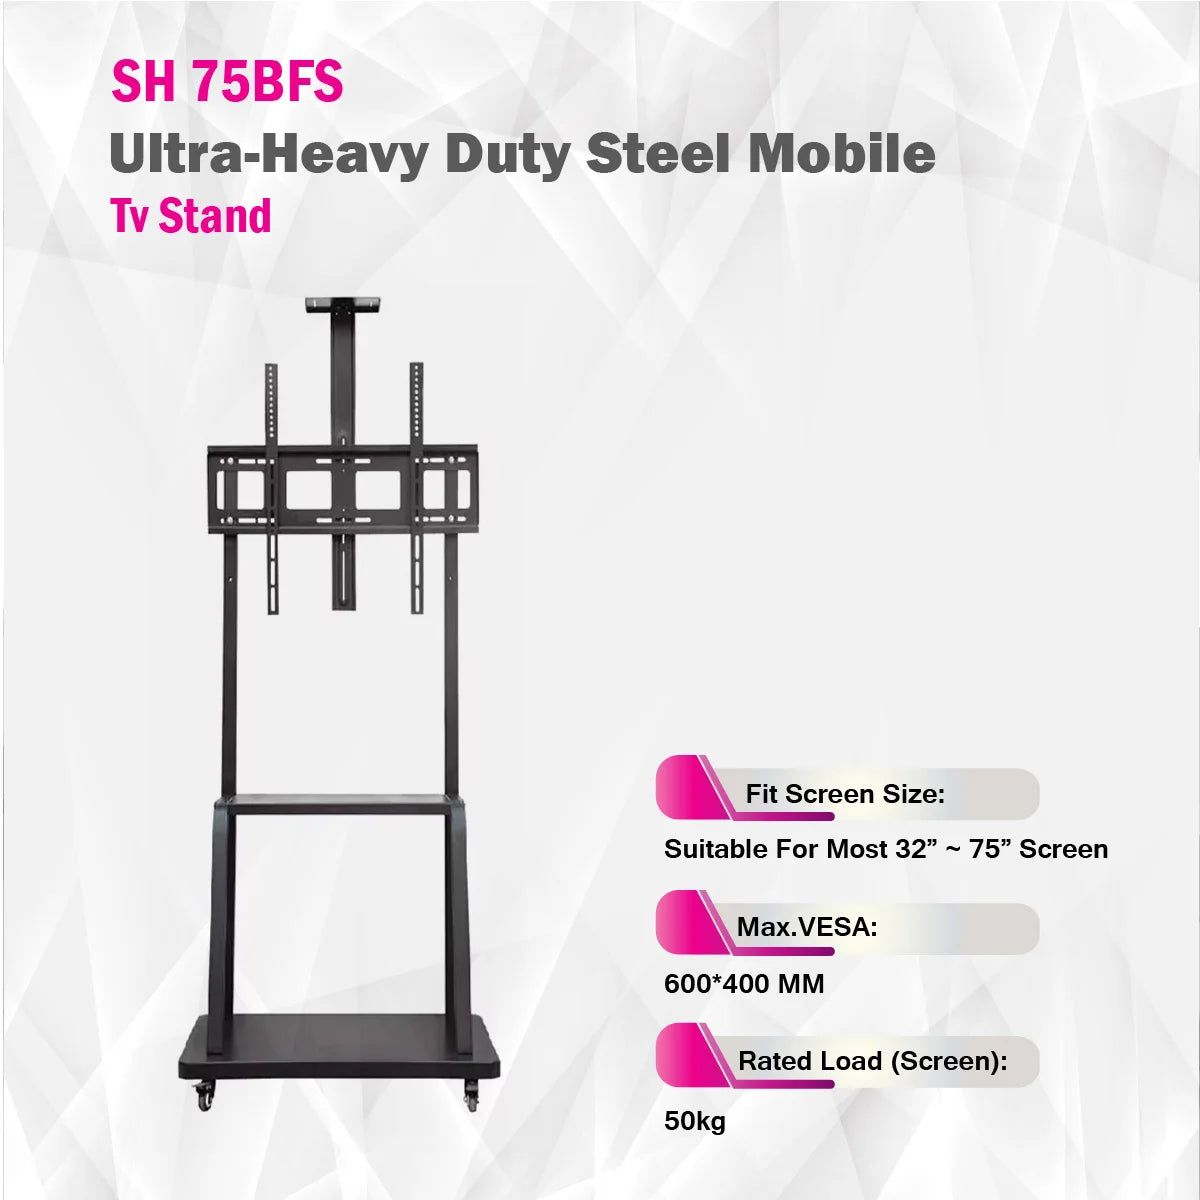 Skilltech - SH 75BFS -  Ultra-Heavy Duty Steel Mobile Tv Stand